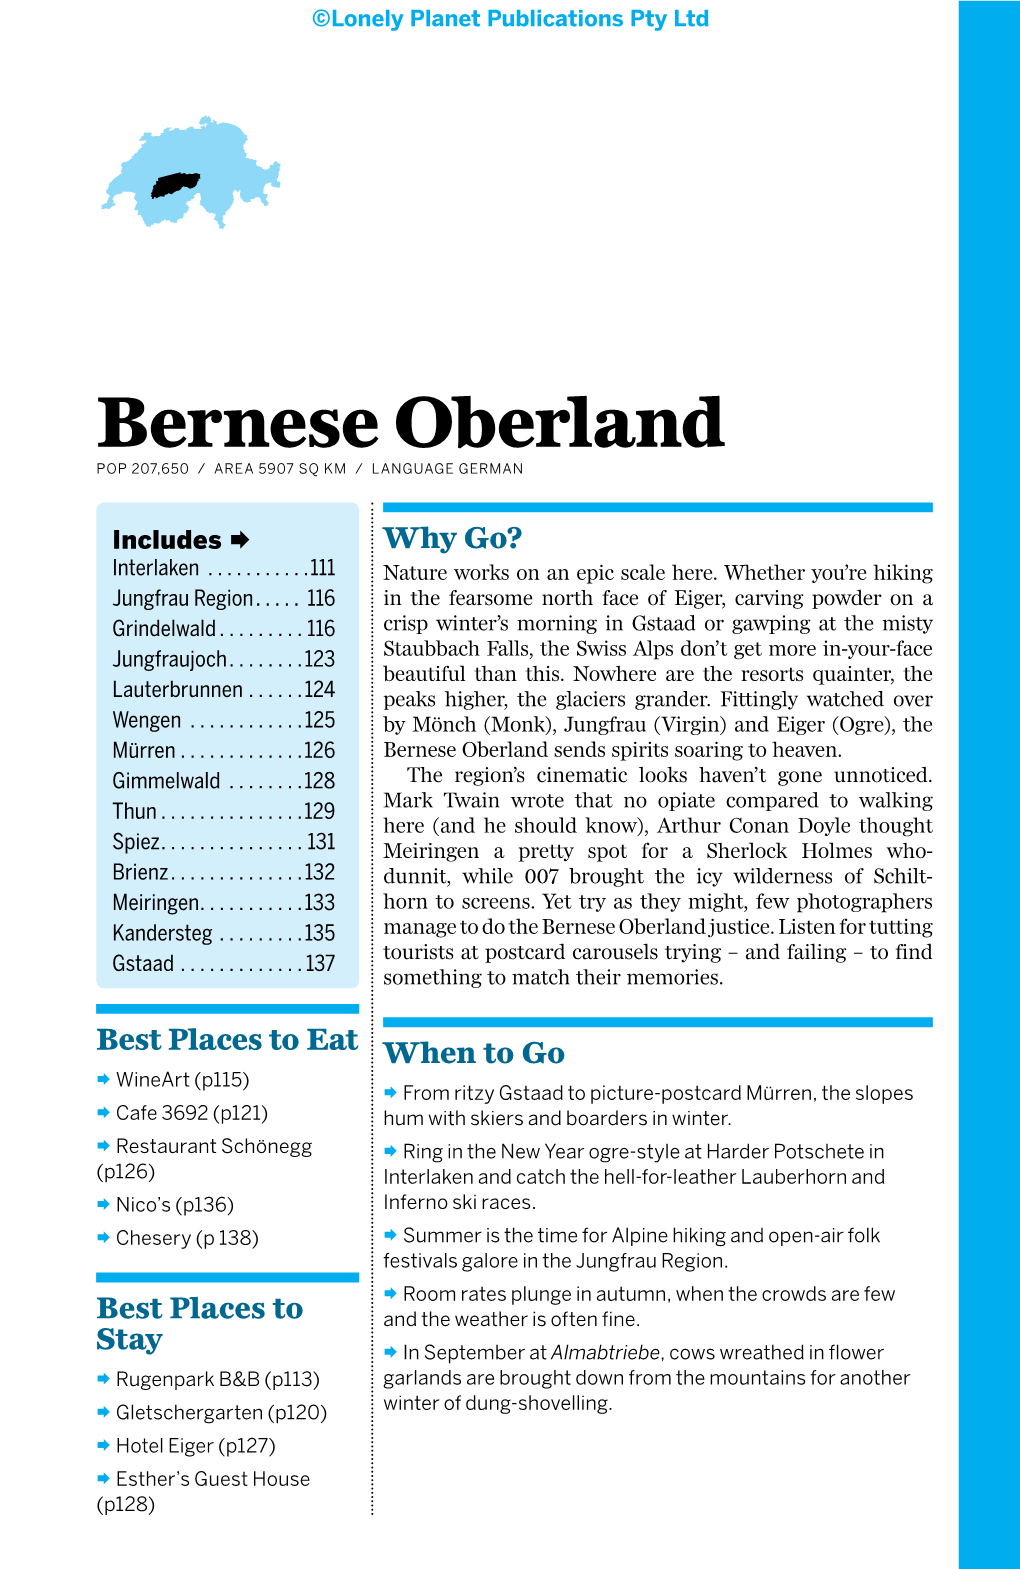 Bernese Oberland Sends Spirits Soaring to Heaven